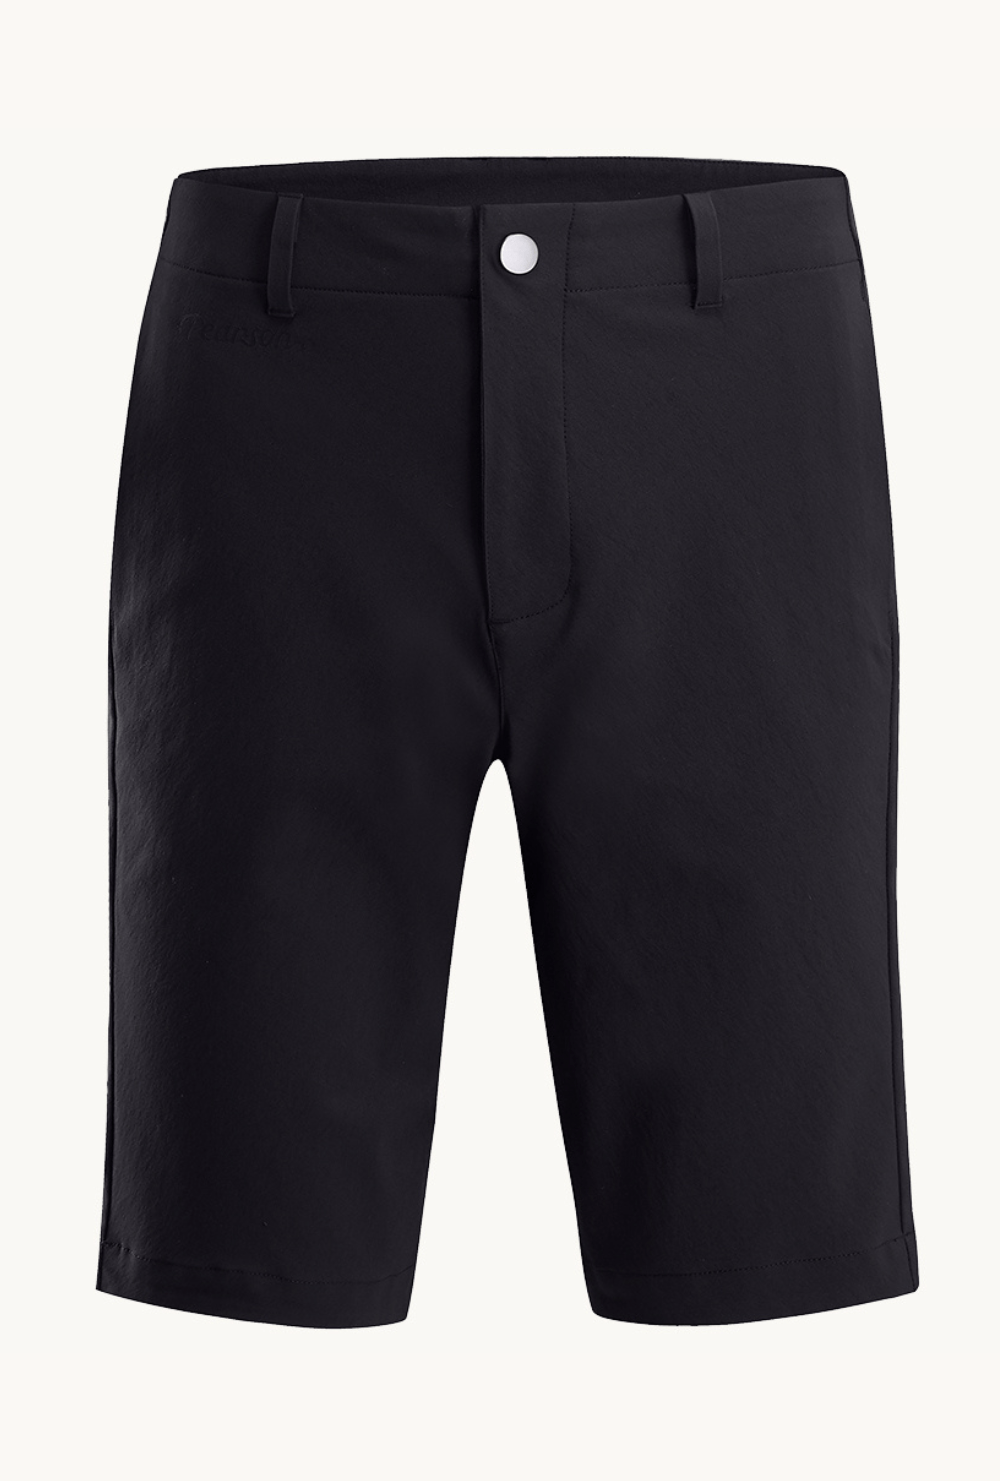 Pearson 1860  Kick Back - Urban Commuter Shorts Black  Medium 32 / Black